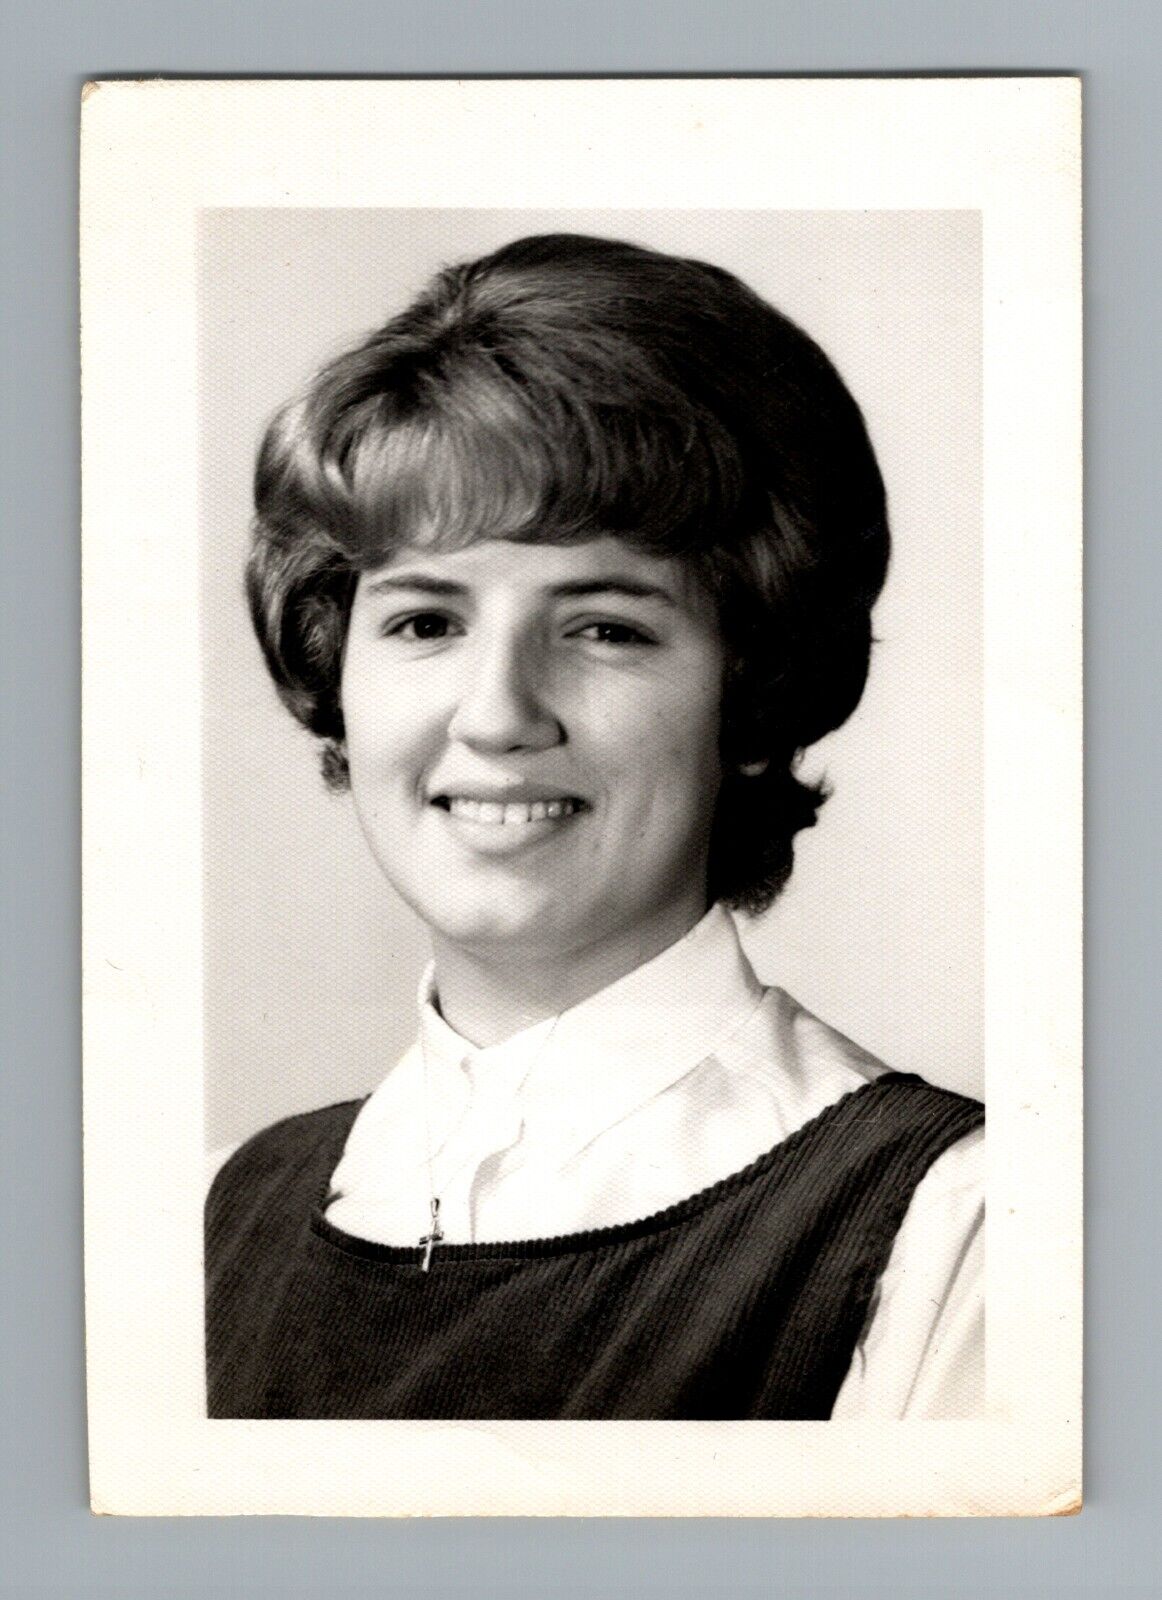 Vintage 1960s School Portrait Young Woman 2.5x3.5 Black and White